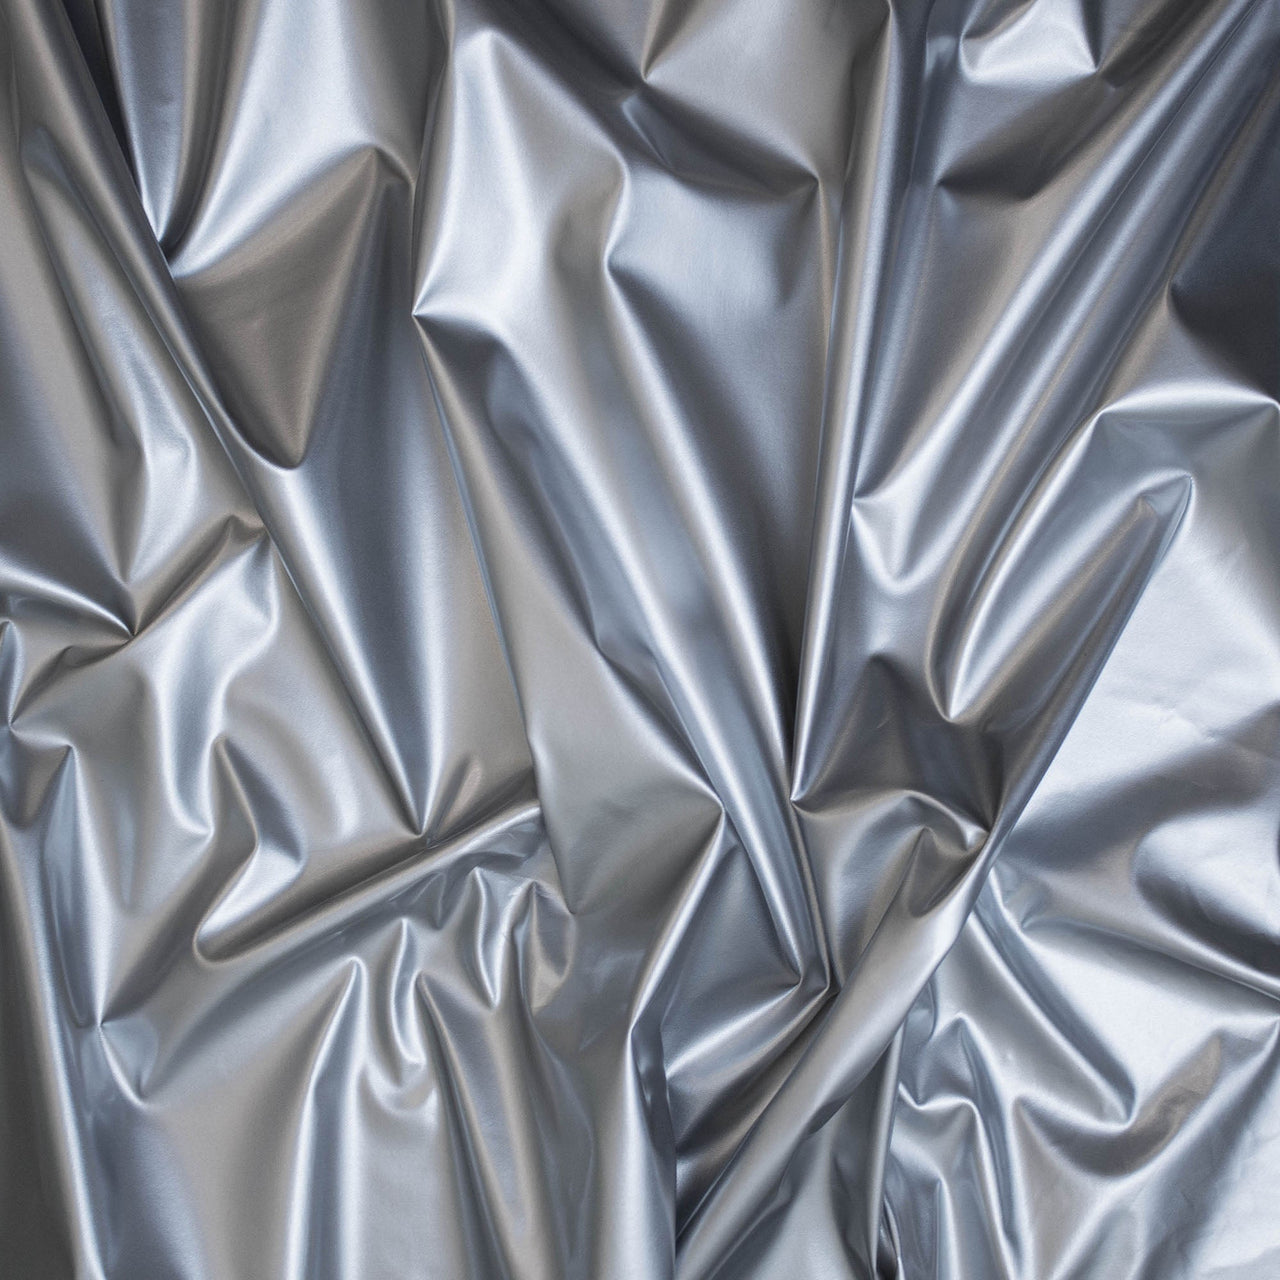 Silver PVC Shiny Stretch Fabric - 1 Way Natural Stretch - PU Coated